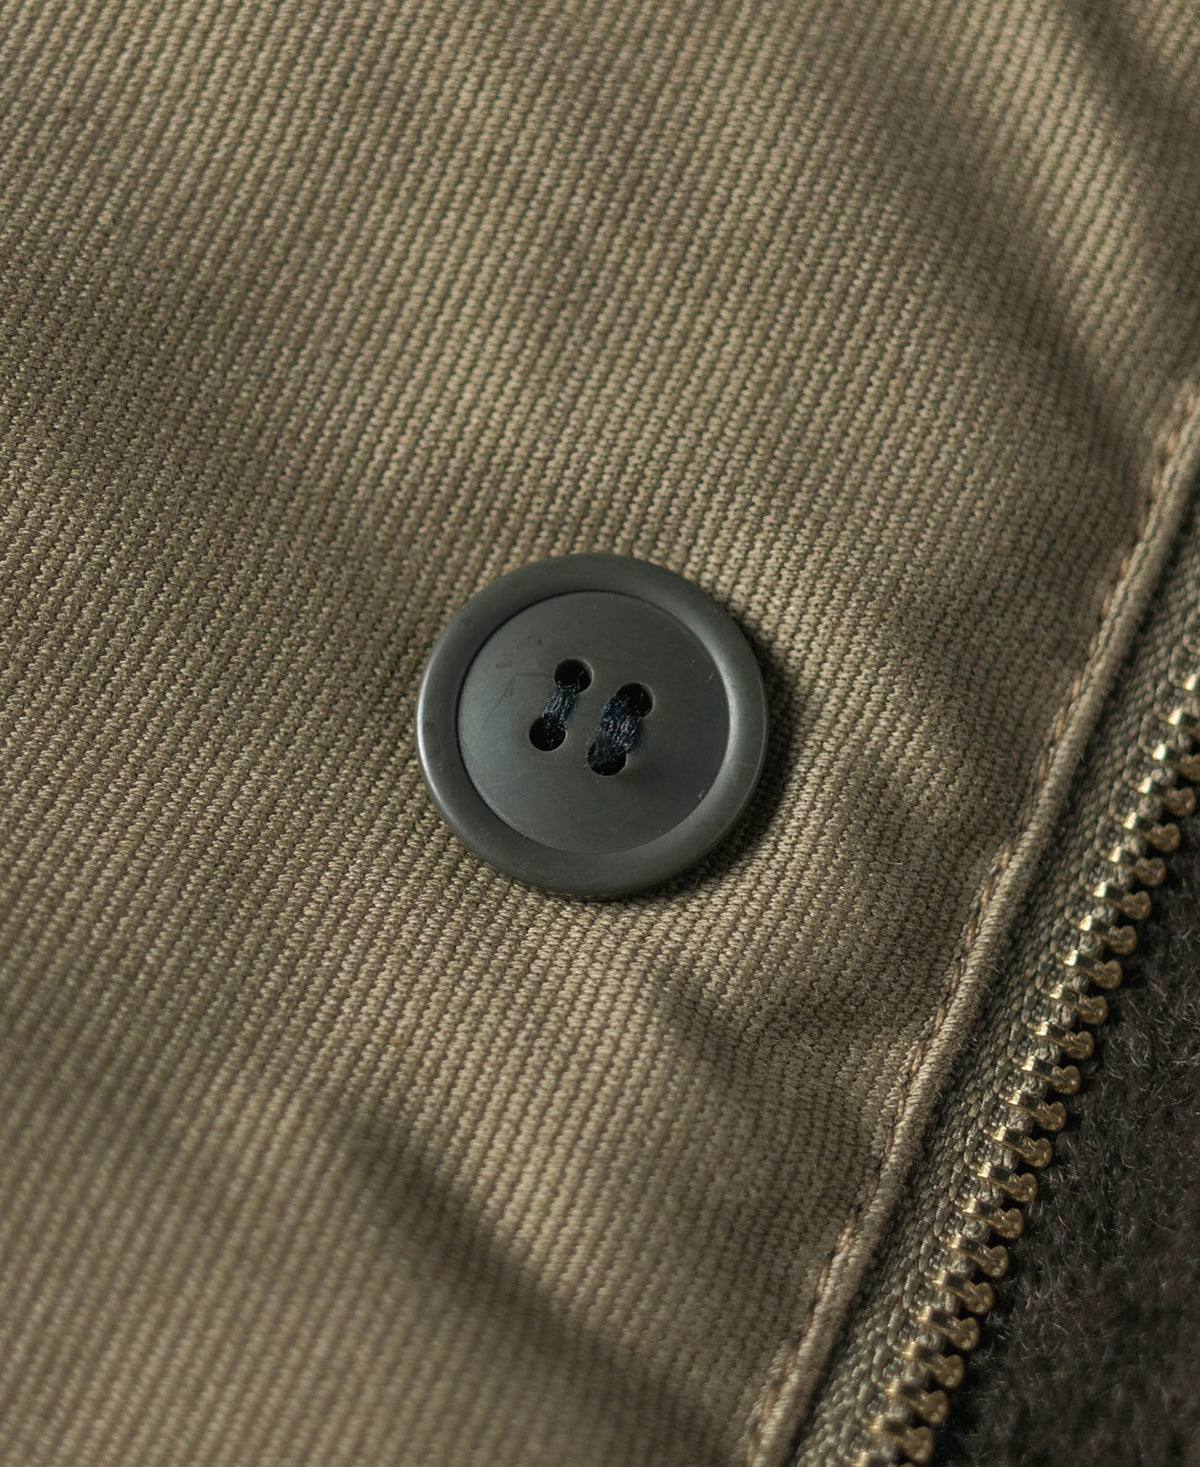 ButtonMode Regular Suit Buttons 16pc Set includes 4 Buttons measuring 20mm  (3/4 Inch) for Jacket Front, 12 Buttons measuring 15mm (9/16 Inch) for  Jacket Sleeves and Pants, Black, 16-Buttons - Walmart.com